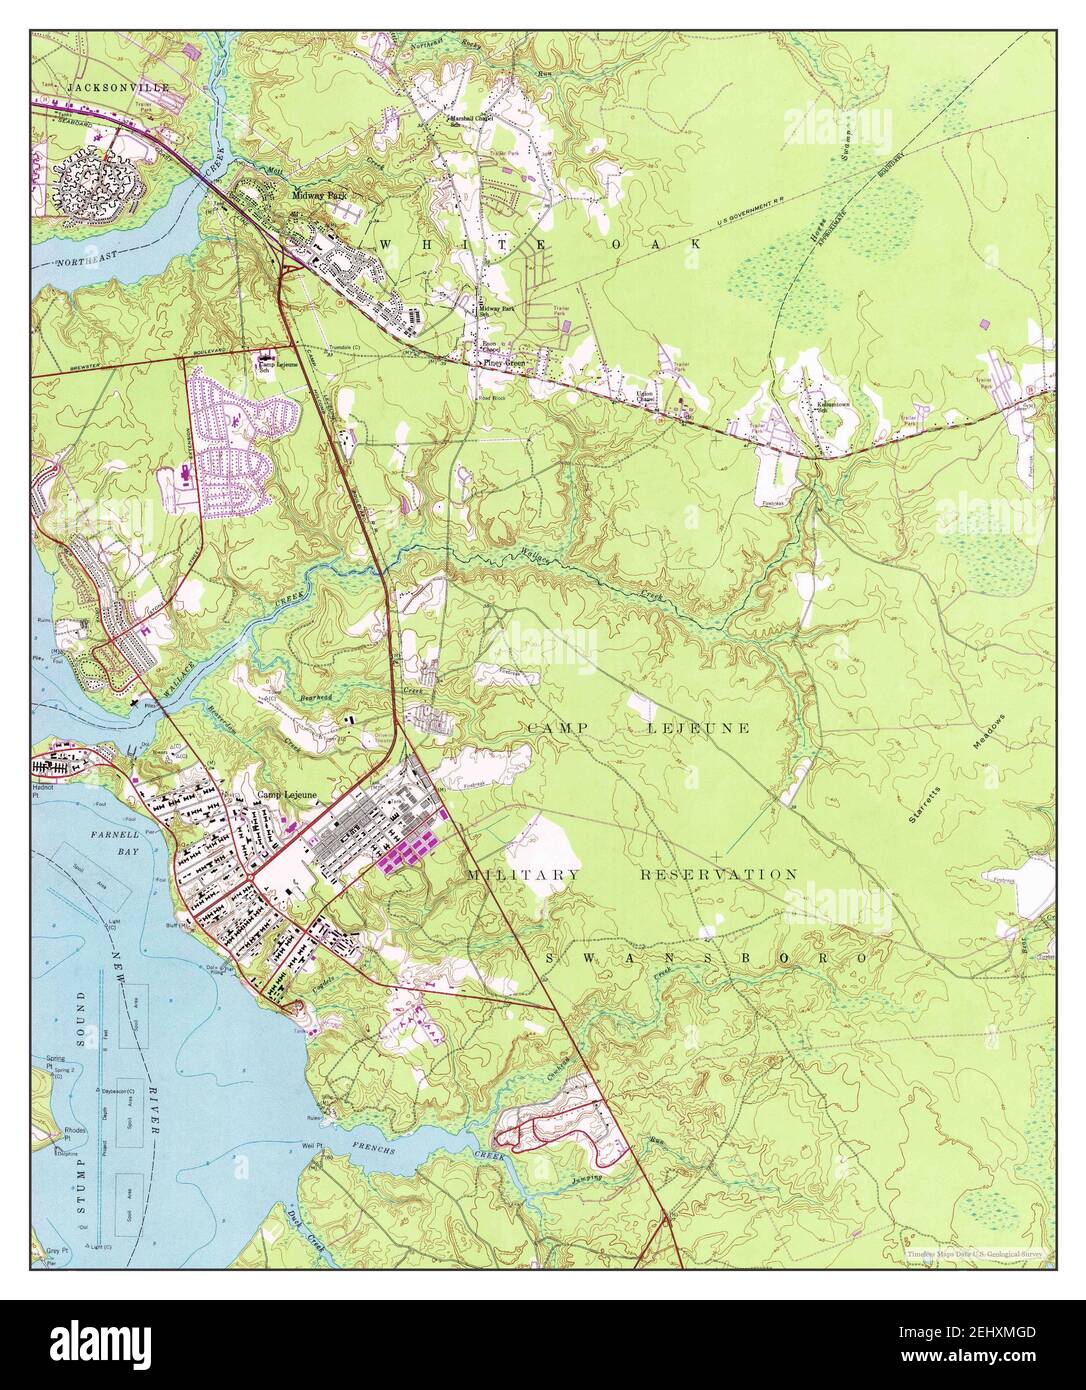 Camp Lejeune North Carolina Map 1952 124000 United States Of America By Timeless Maps Data Us Geological Survey 2EHXMGD 